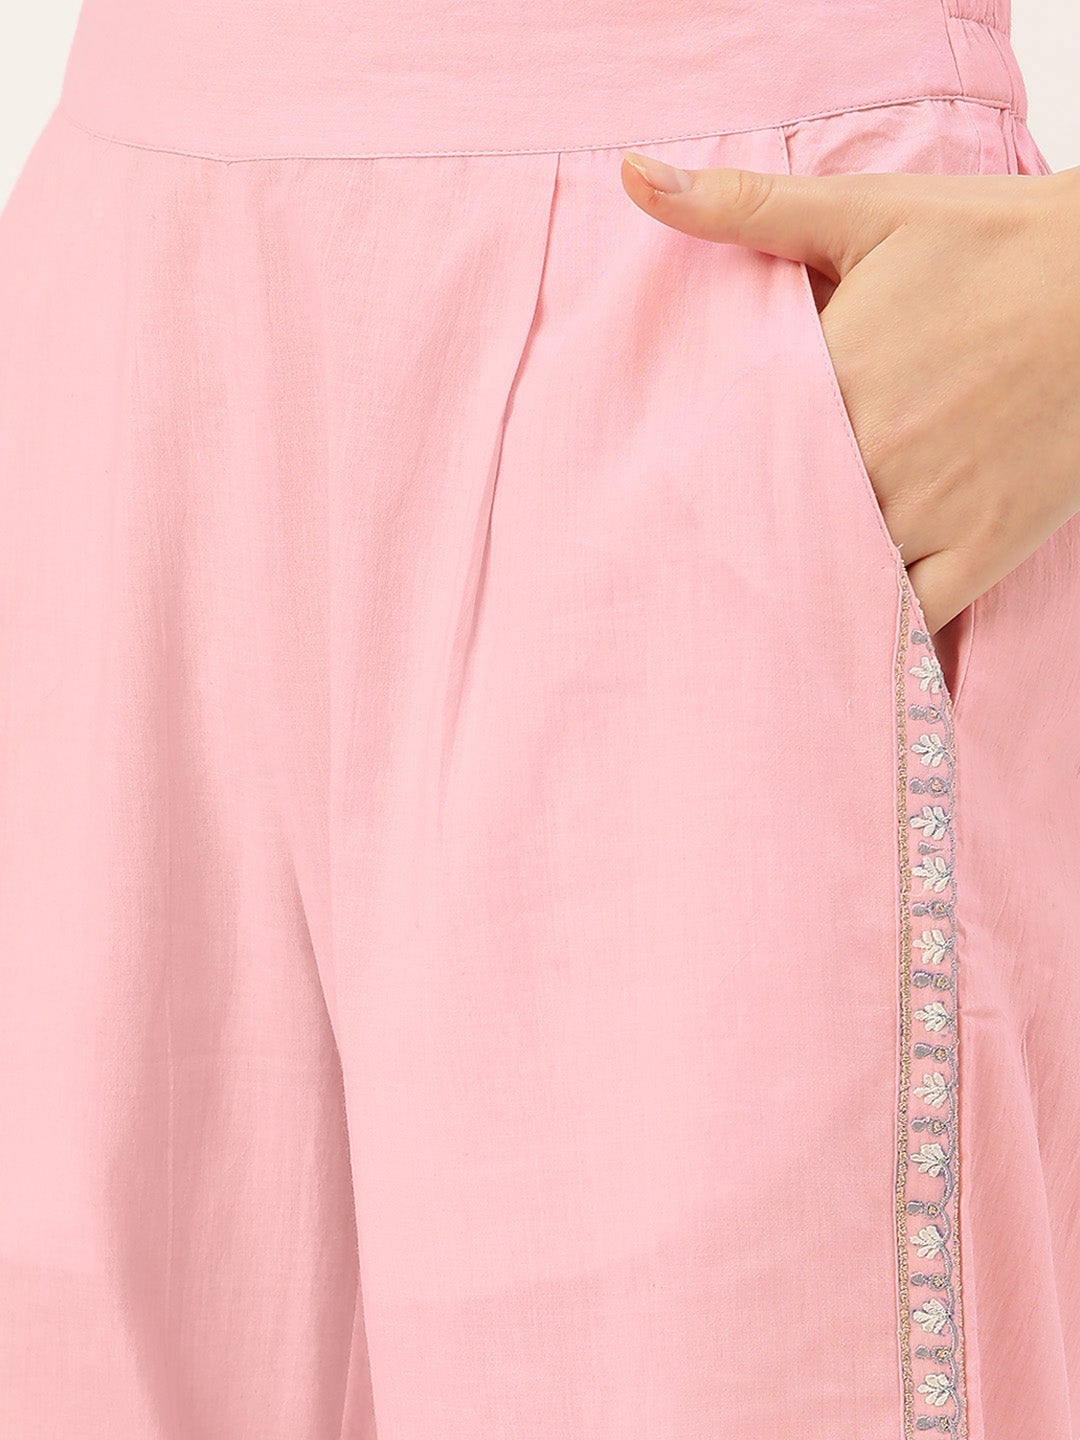 Arayna Women's Cotton Printed Anarkali Kurti with Palazzo Pants Set, Floral  (X-Small) Pink : Amazon.in: Fashion